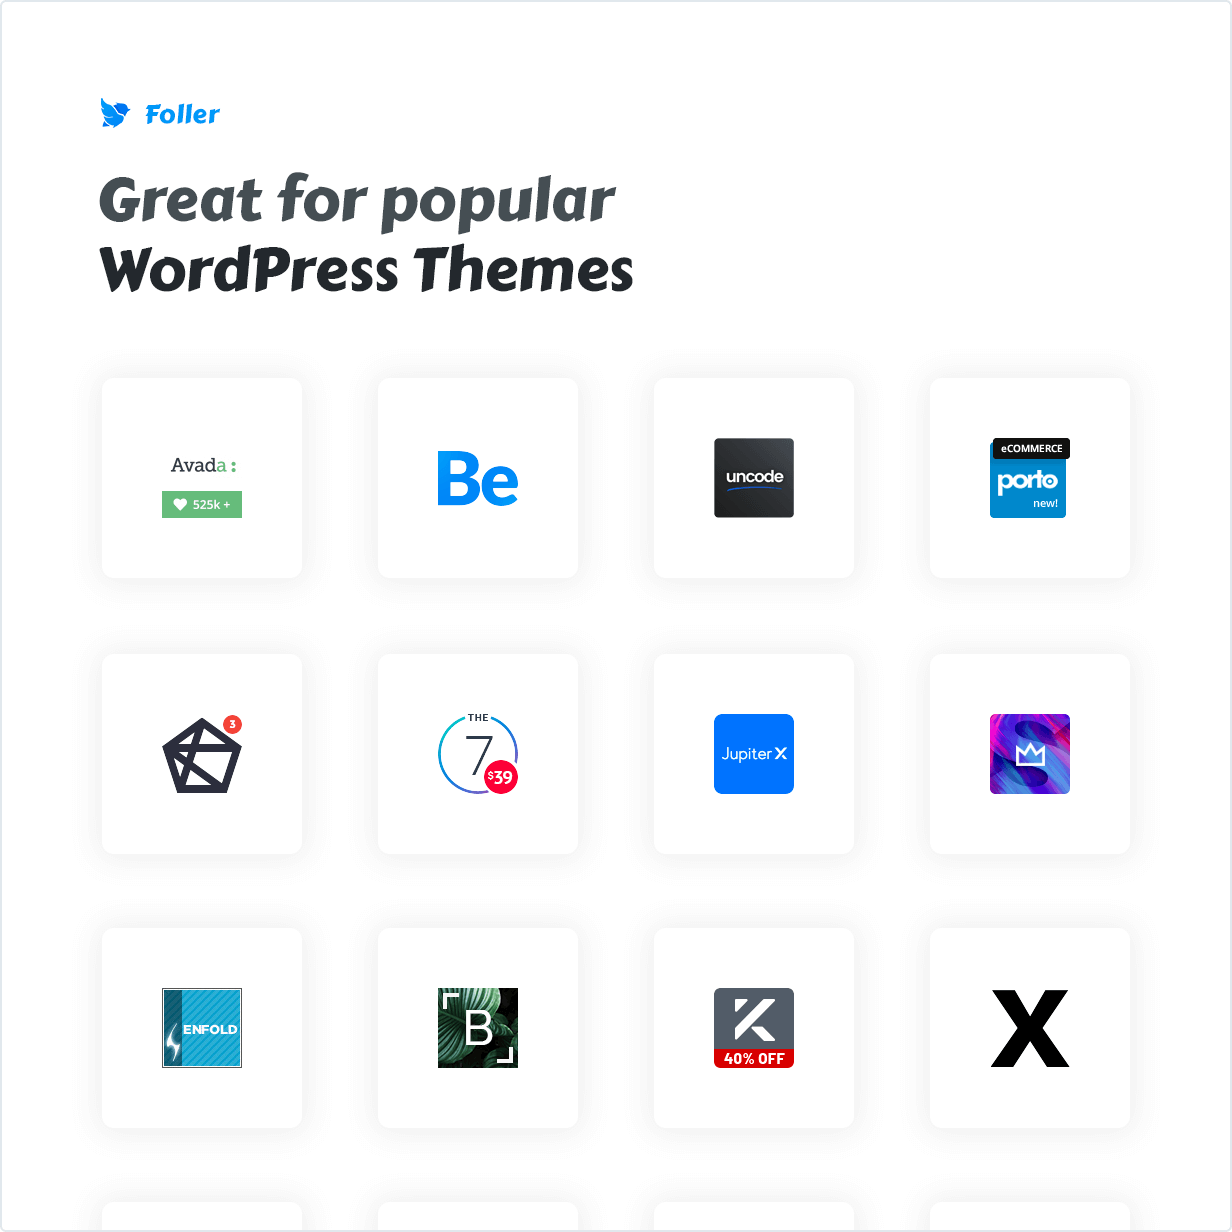 Great for popular WordPress Themes